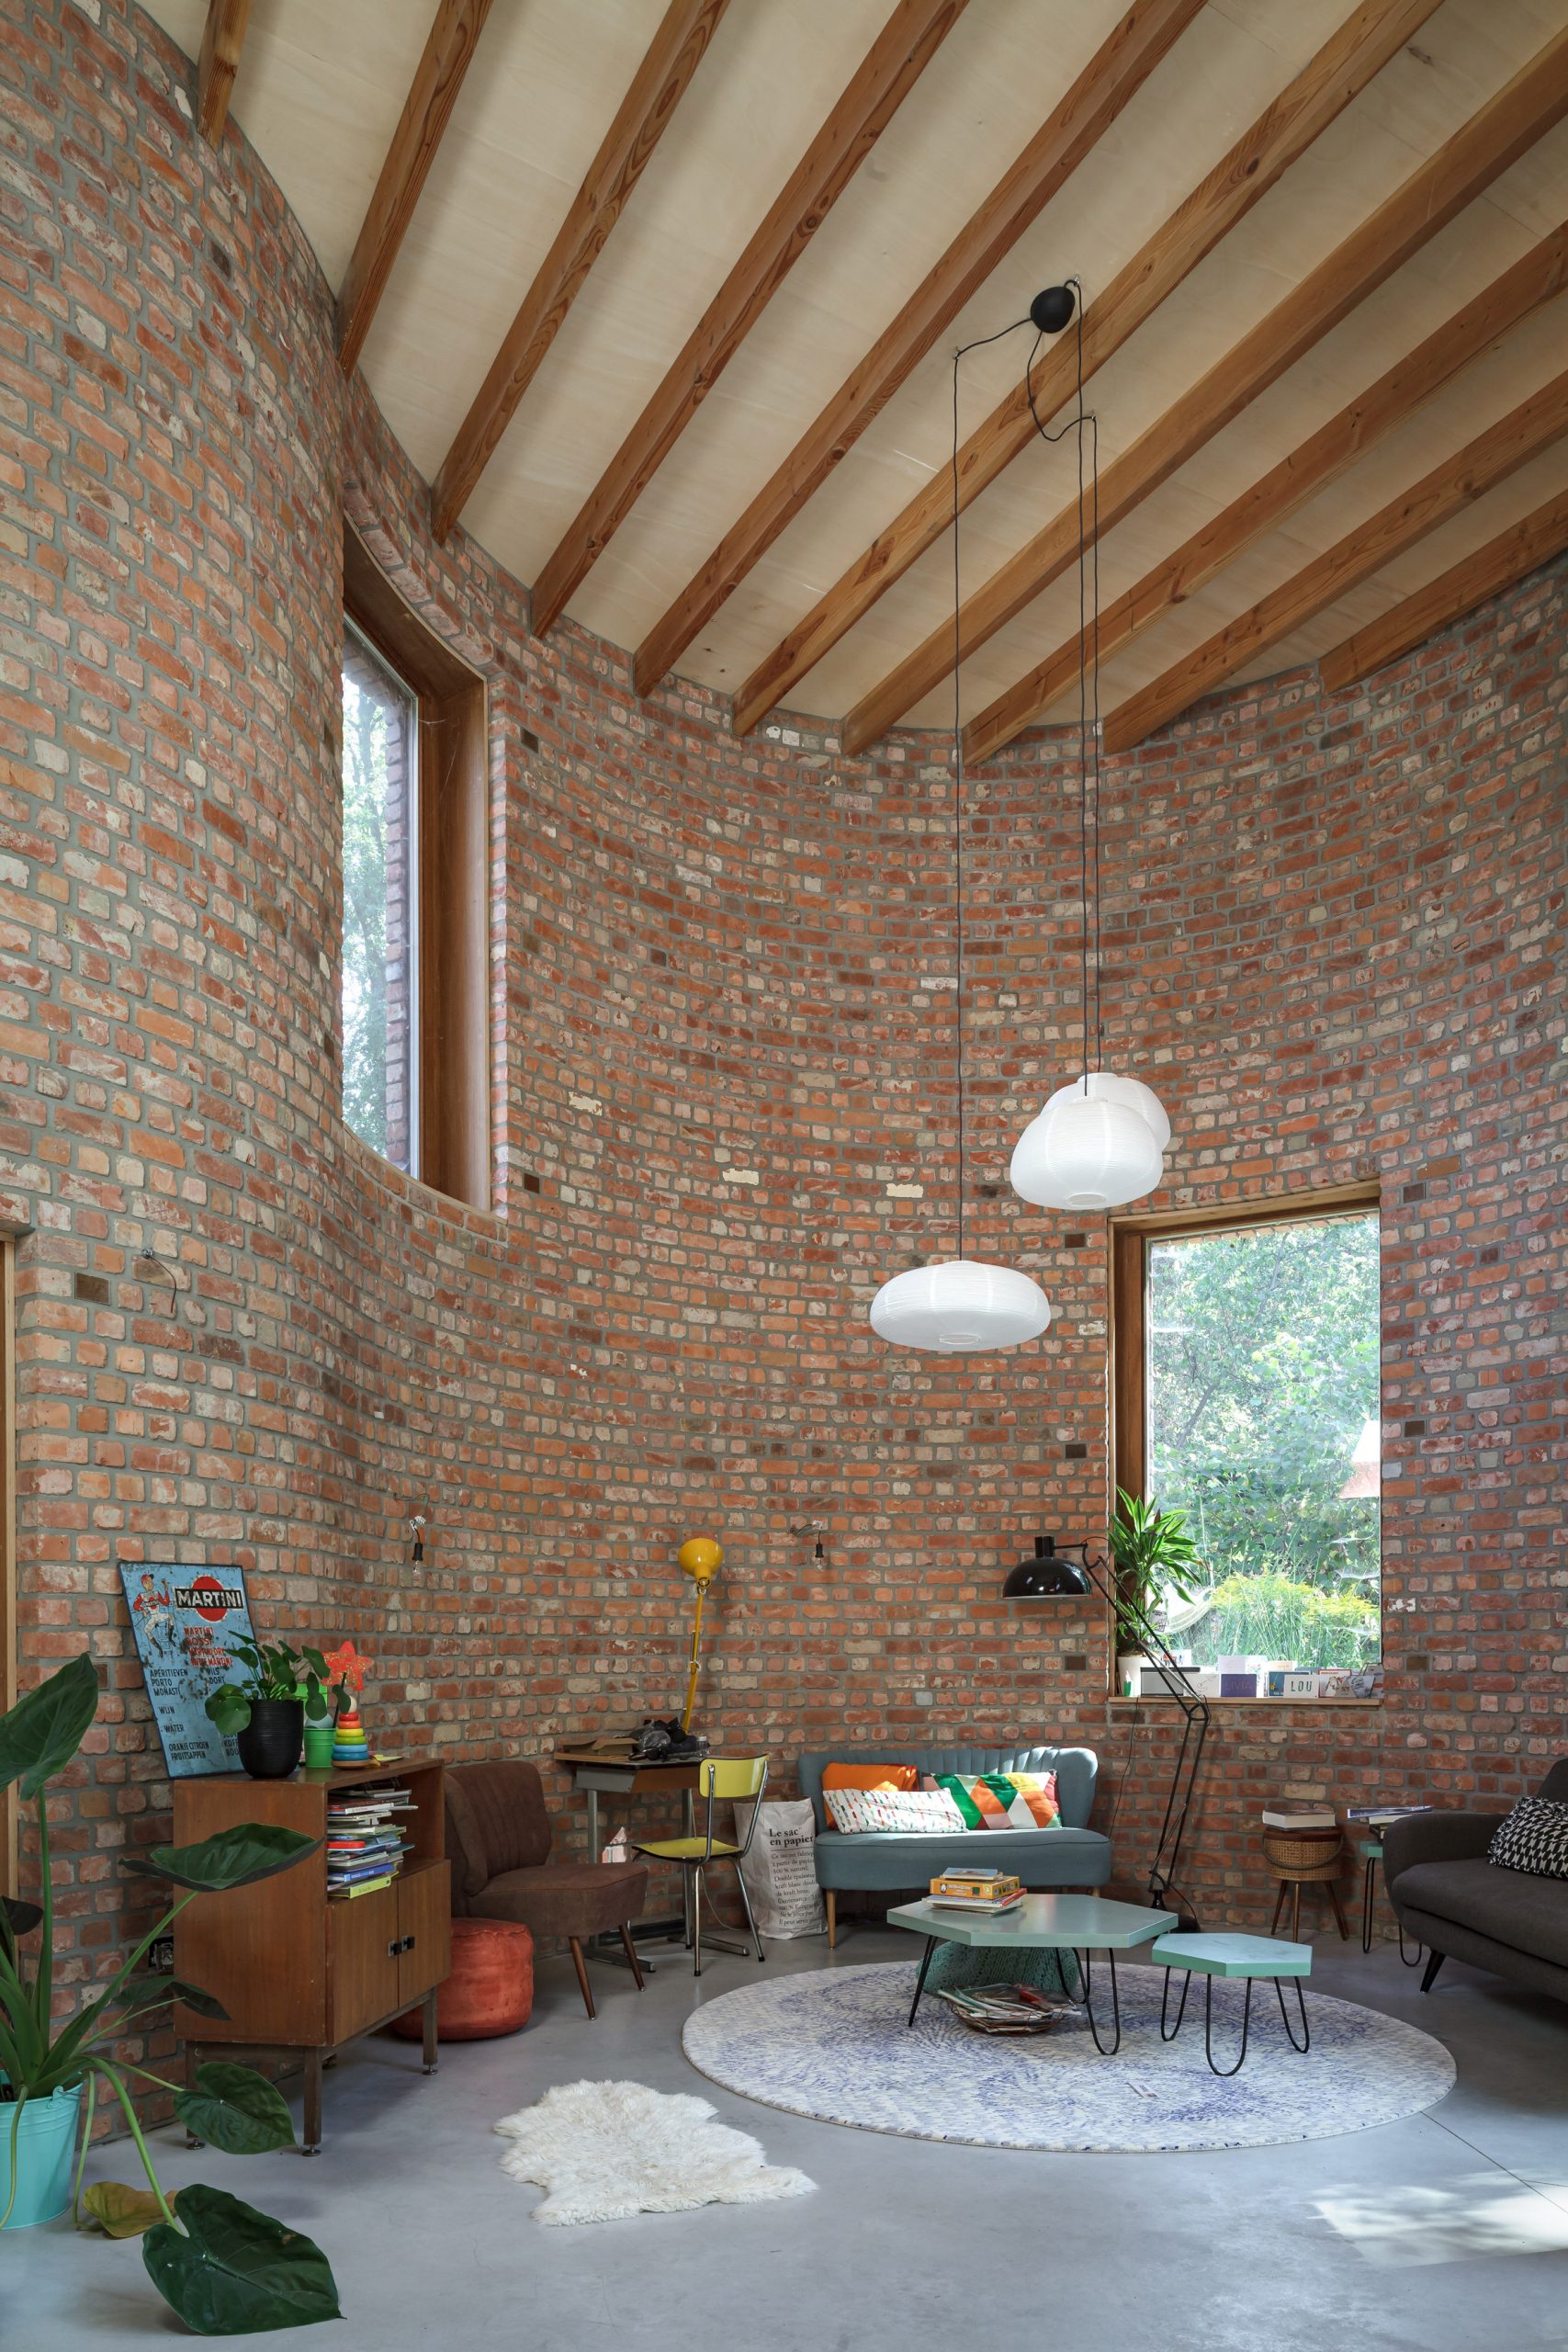 Interior of GjG House built of reclaimed bricks by BLAF Architecten in Ghent, Belgium